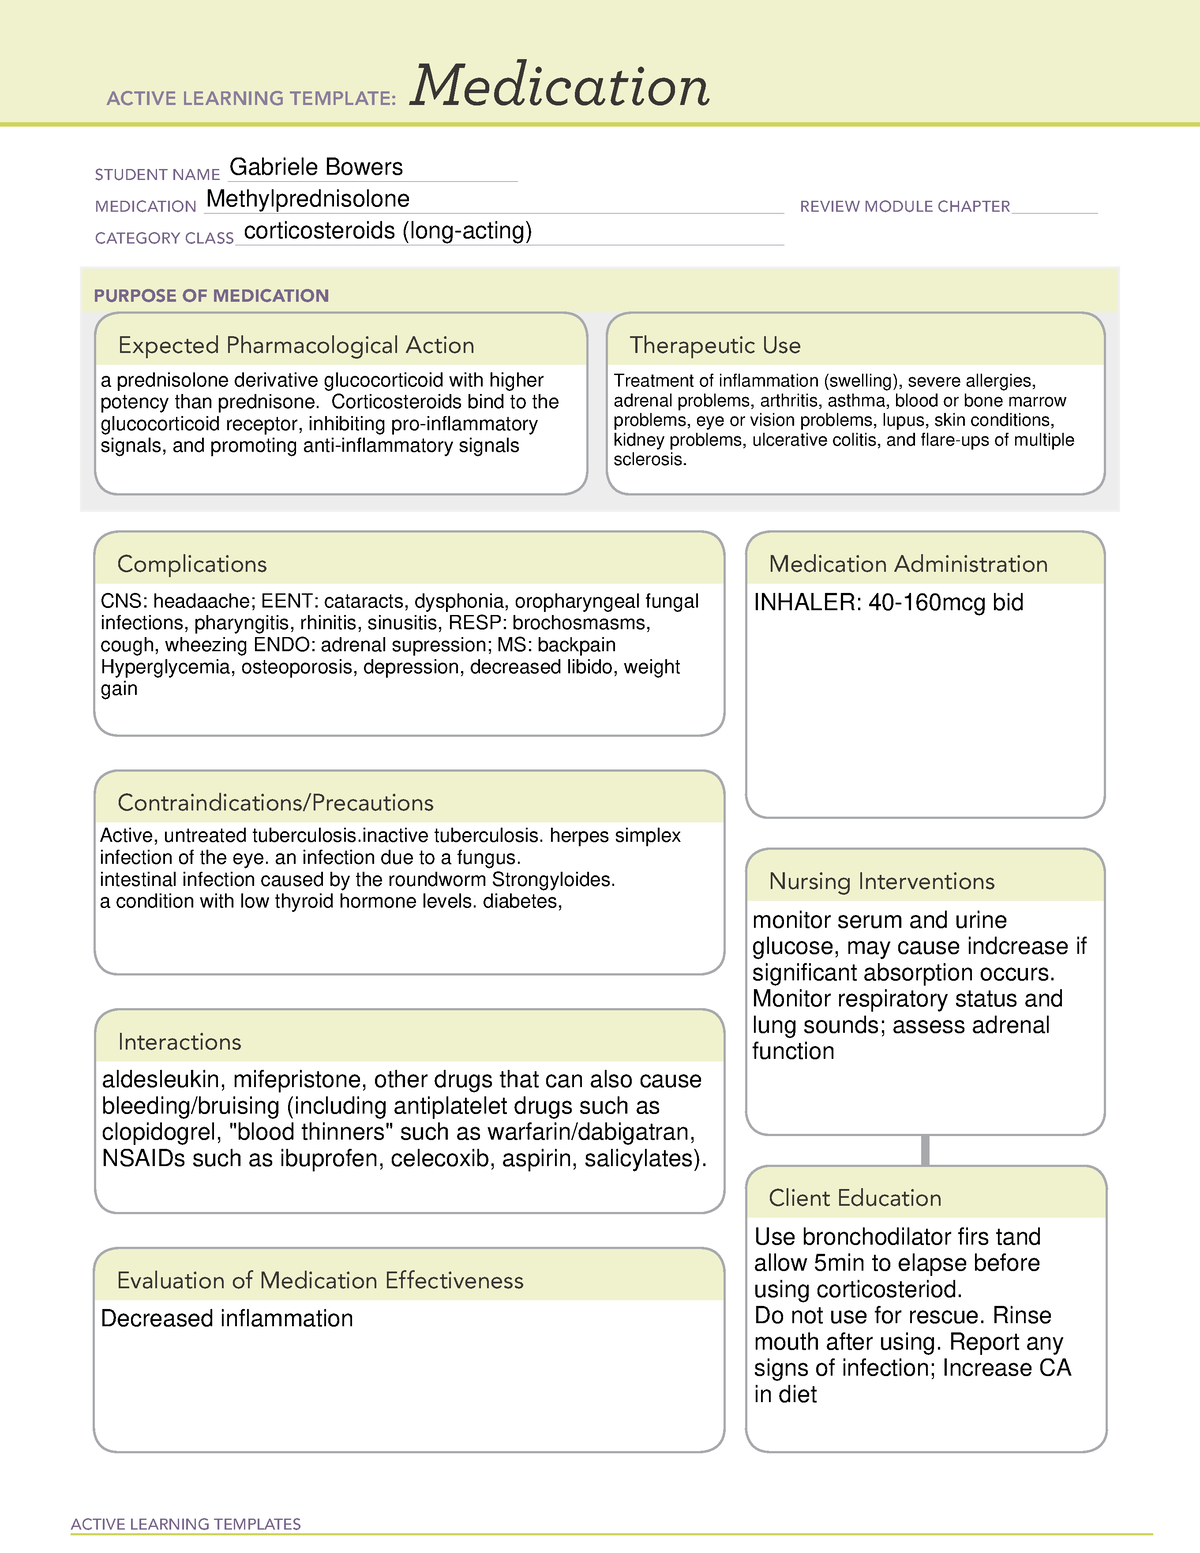 Methylprednisolone Drug Information Sheet ACTIVE LEARNING TEMPLATES 